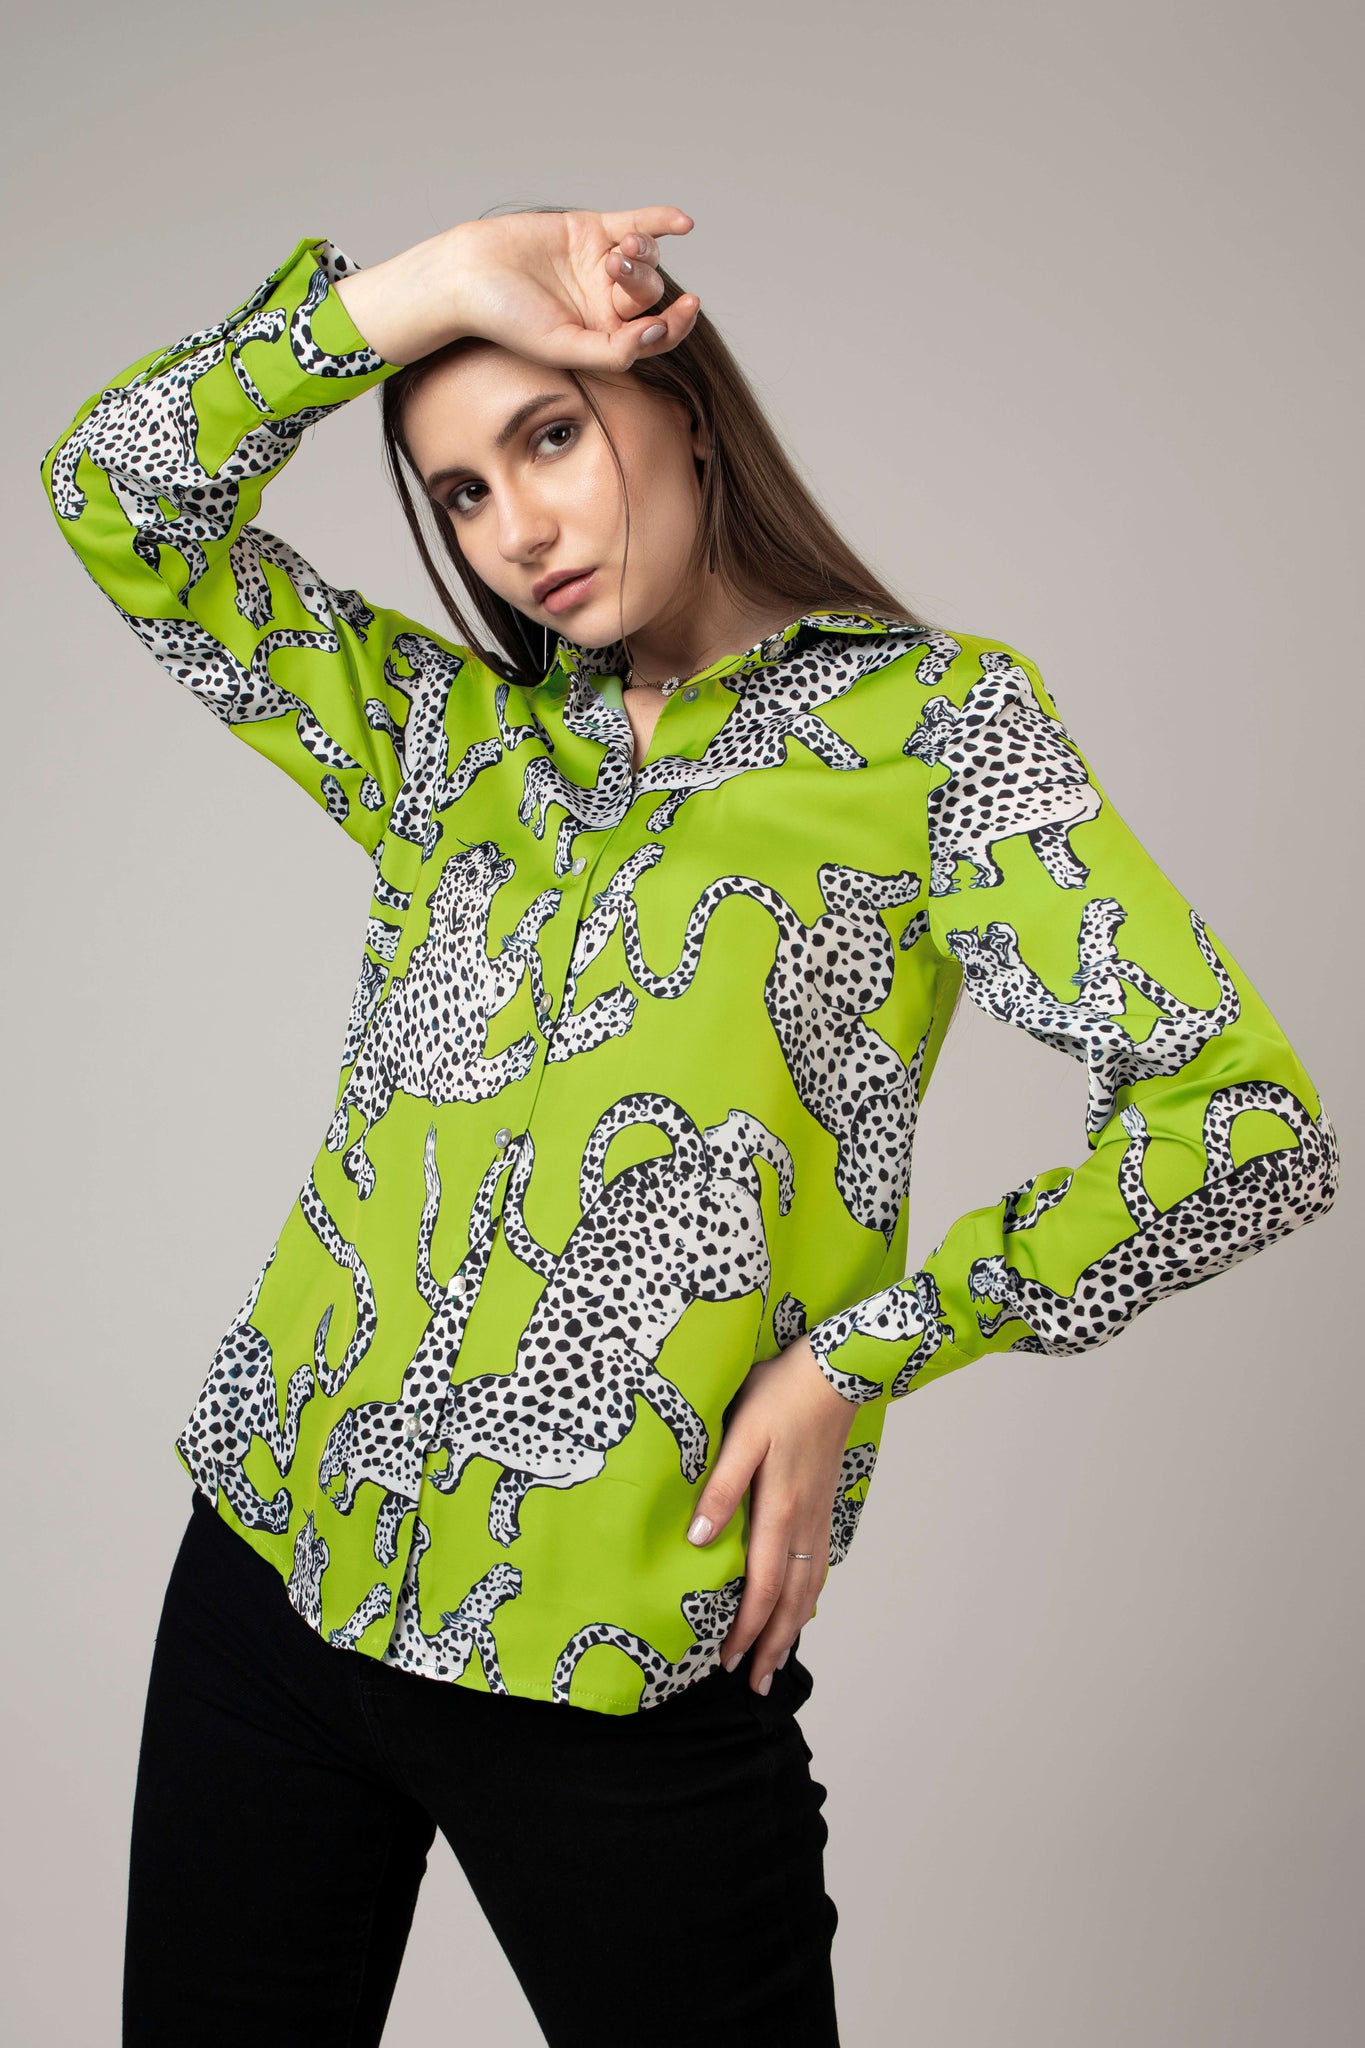 Leopard Printed Shirt For Women